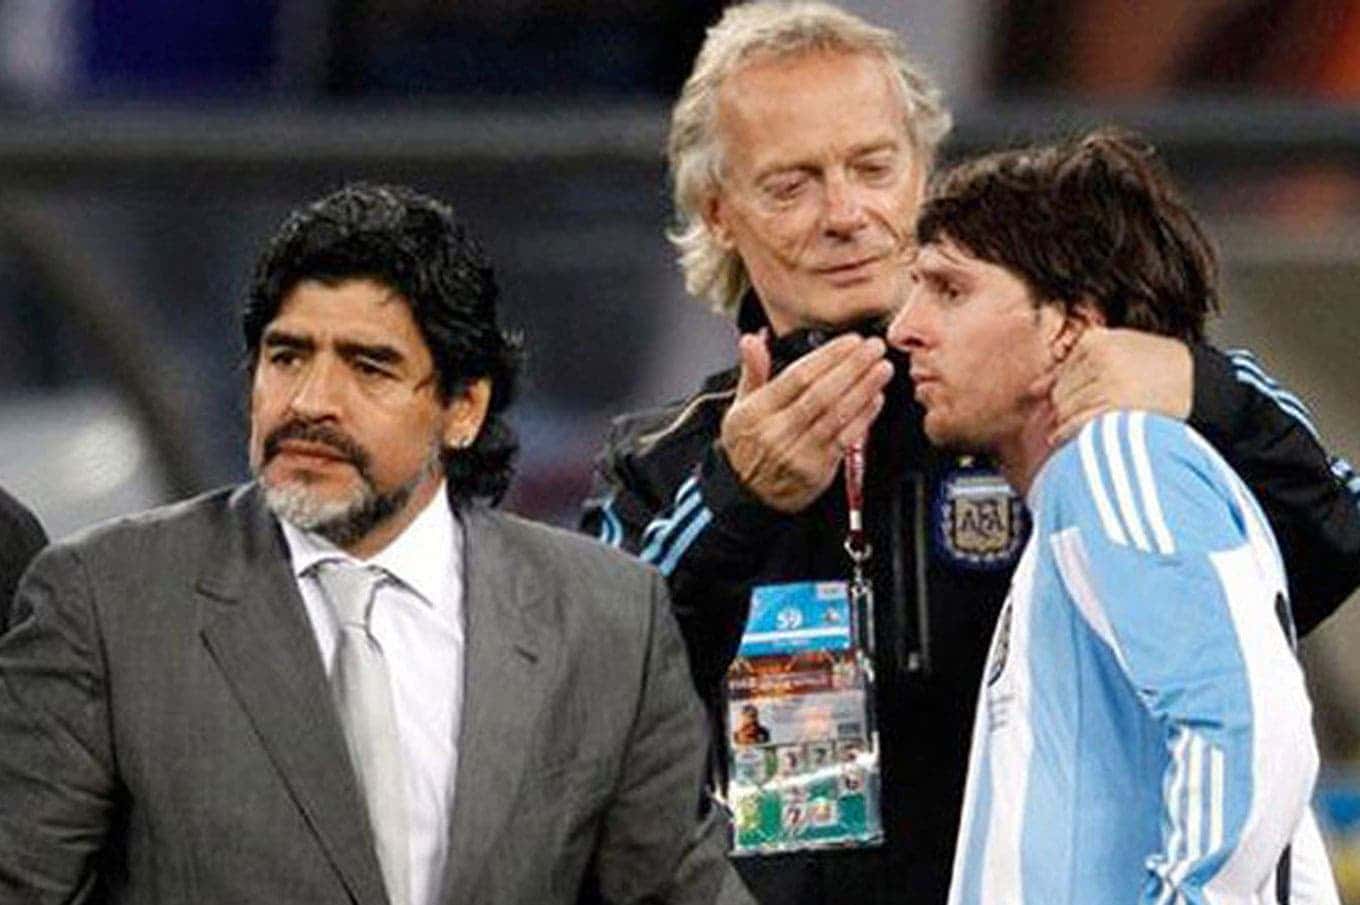 Signorini with Maradona and Mesi